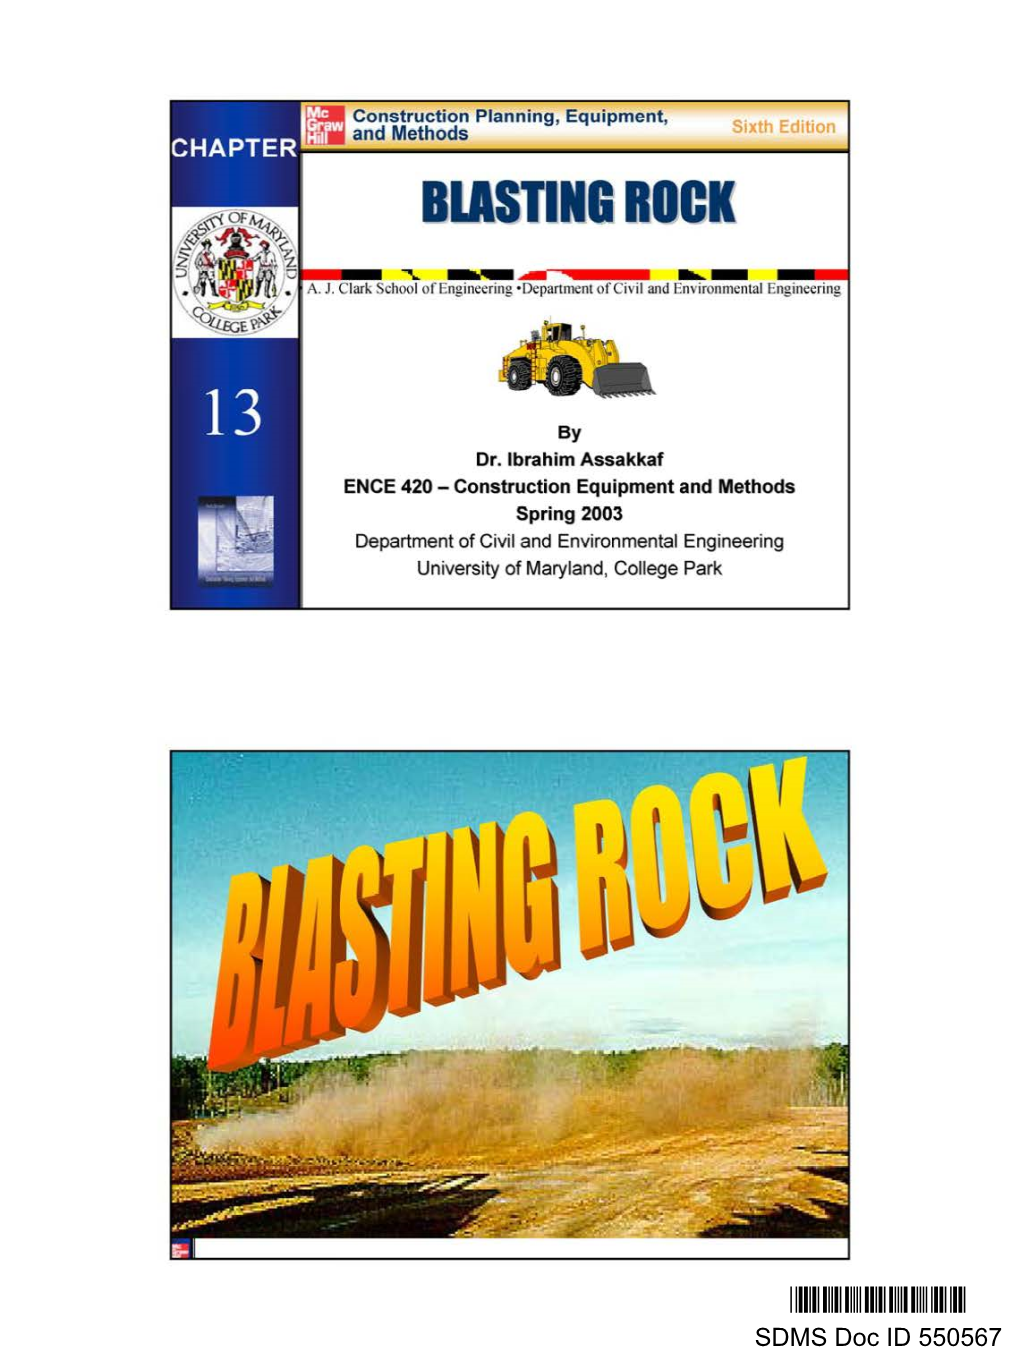 Presentation: Blasting Rock Report